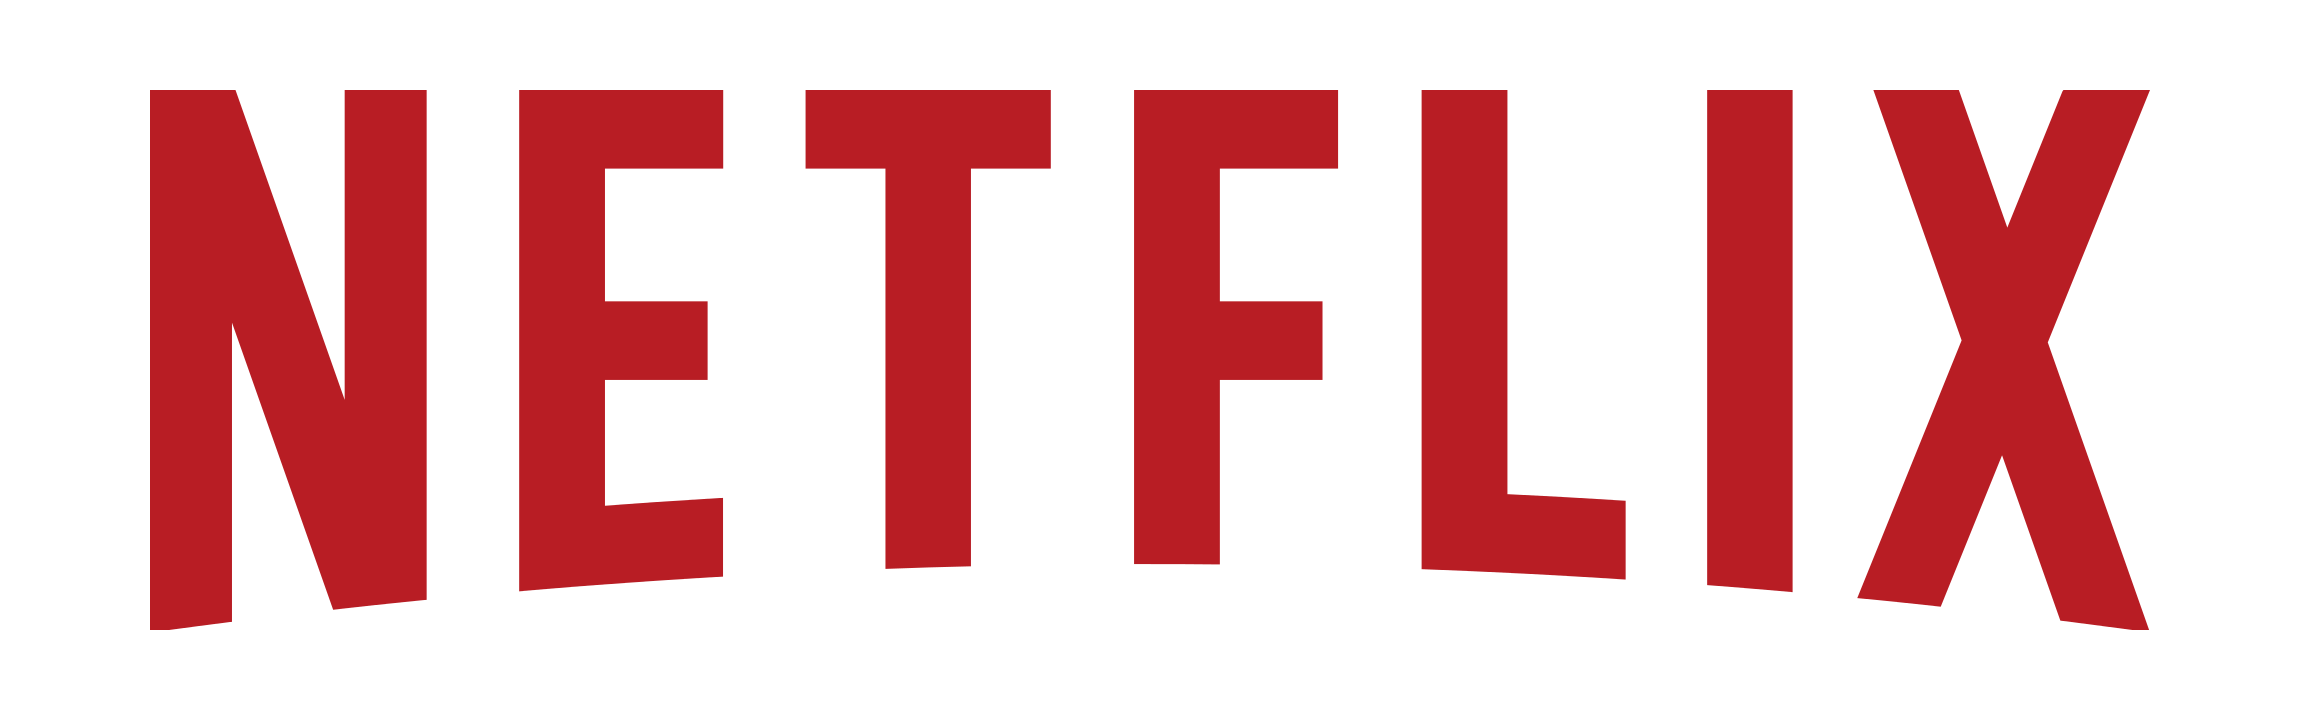 Netflix Original Logo - Netflix Logo, Netflix Symbol, Meaning, History and Evolution